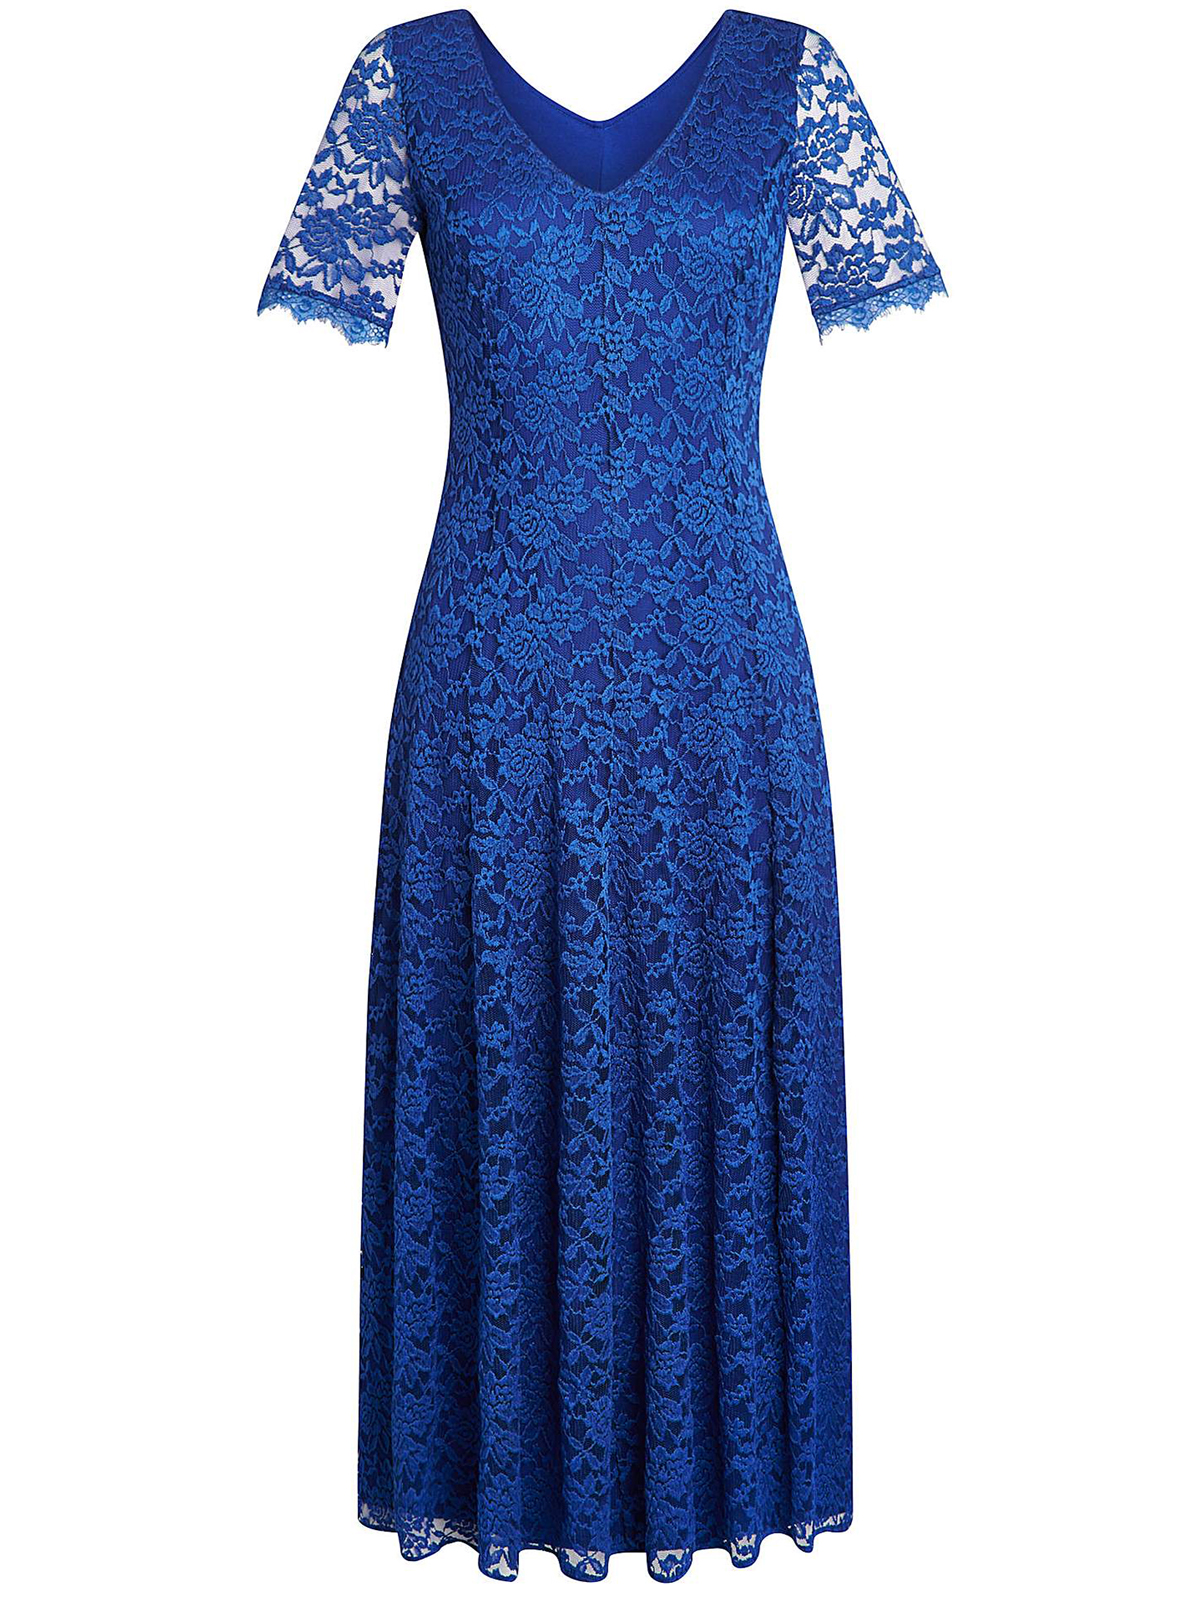 Joanna Hope - - Joanna Hope COBALT-BLUE Floral Lace Maxi Dress